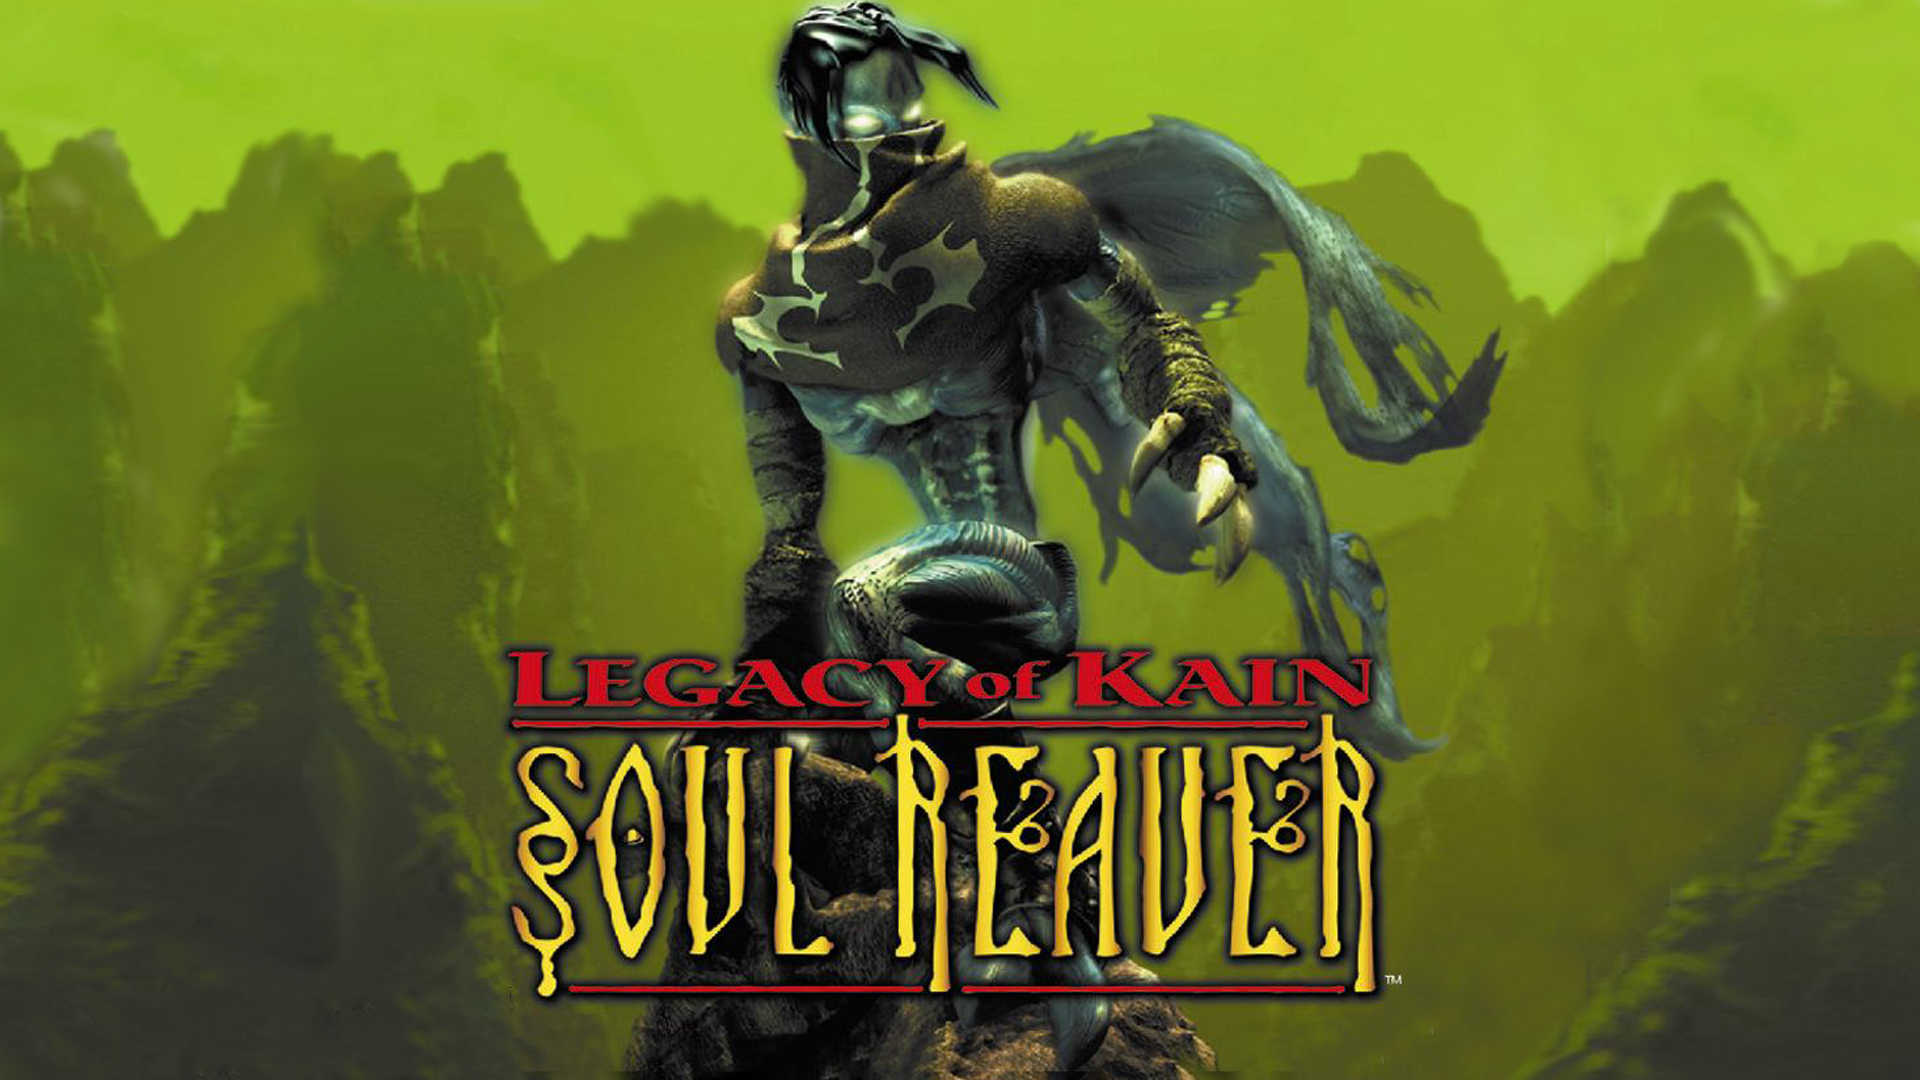 Soul Reaver